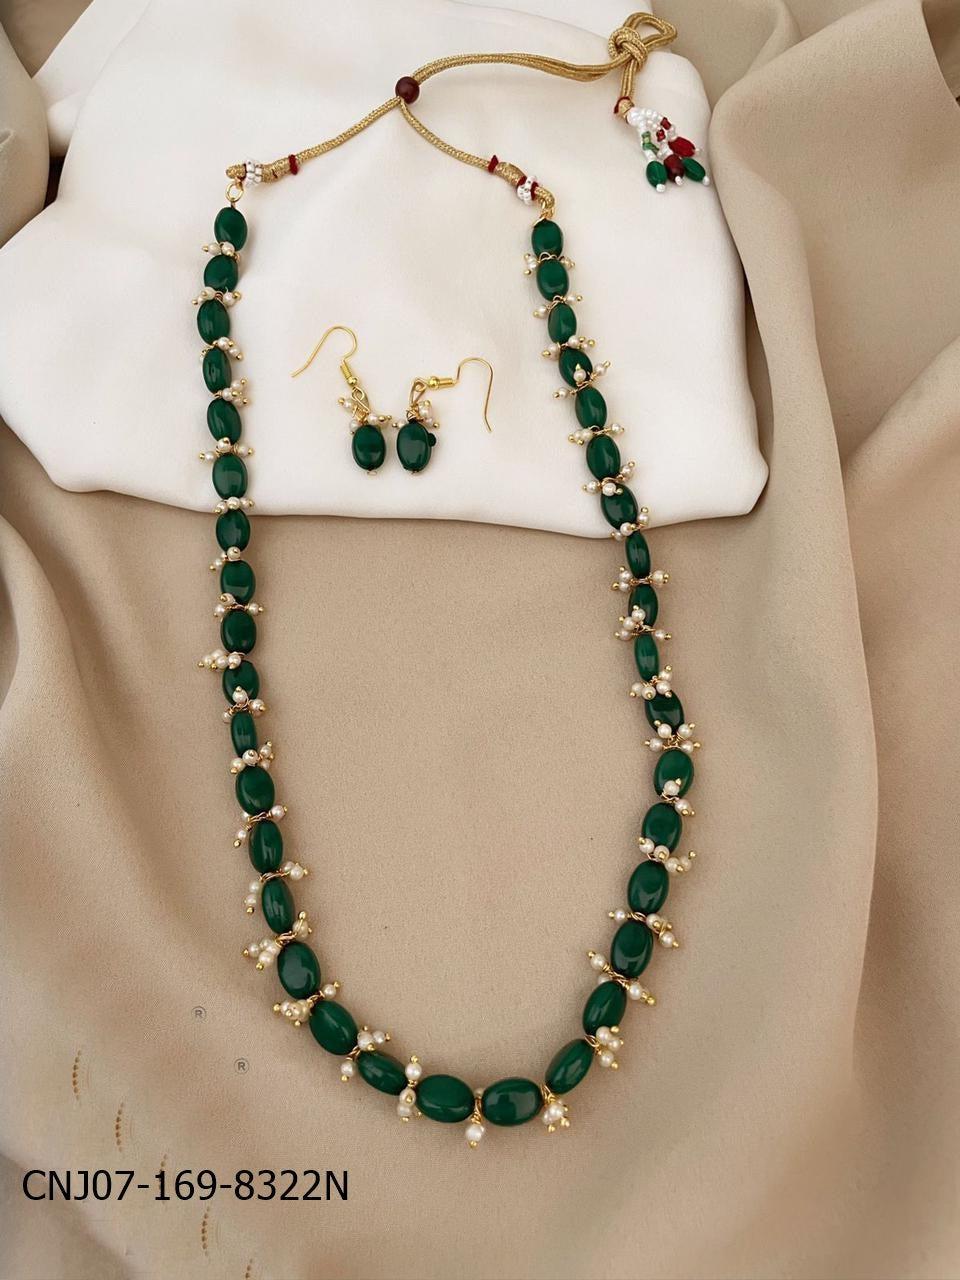 Single layer Green Beads Chain/ 30 INCHES 8322N-Beads Chains-Griiham-Griiham